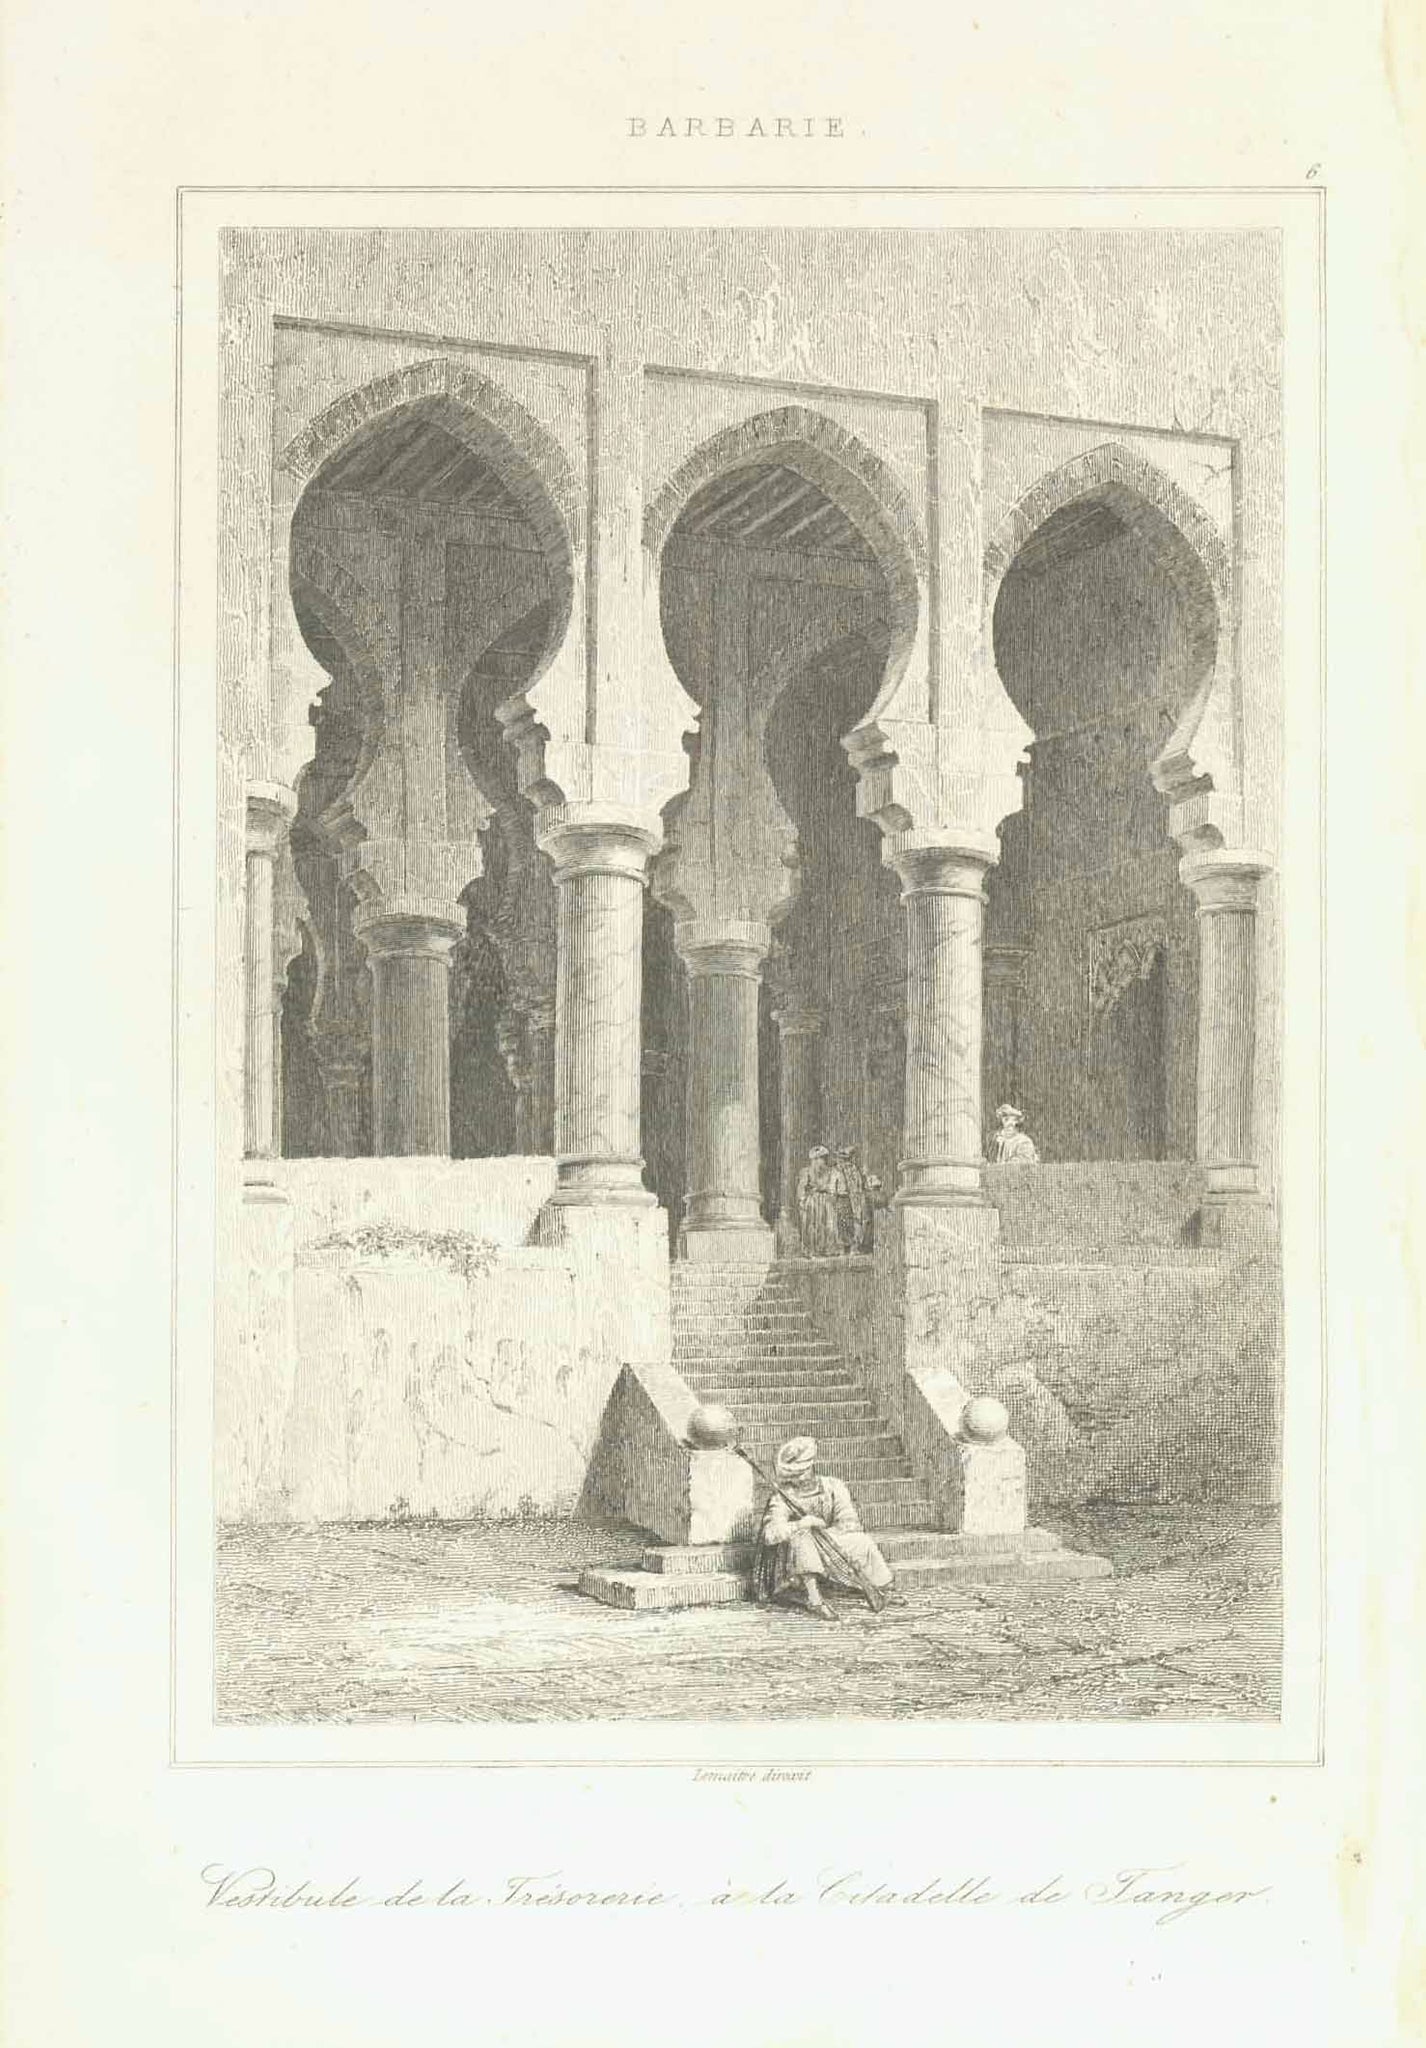 "Vestibule de la Tresorerie a la Citadelle de Tanger"  Morocco,Marokko, Tangier, Tanger, Magreb  Steel engraving by Lemaitre published 1848.  Original antique print  